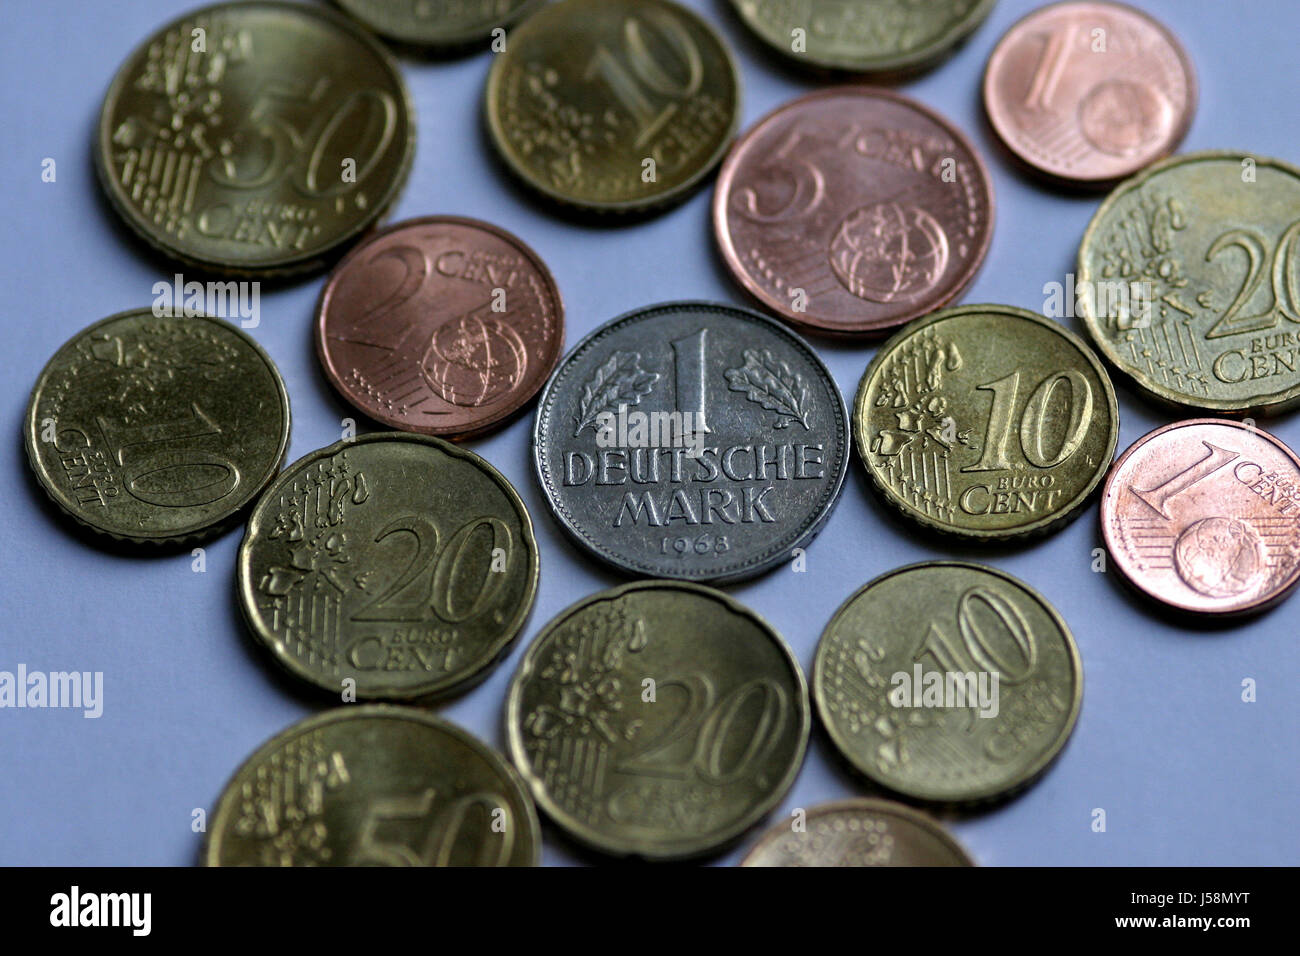 currency,euro,coins,past,stable,money,d-mark,alte zeiten ...